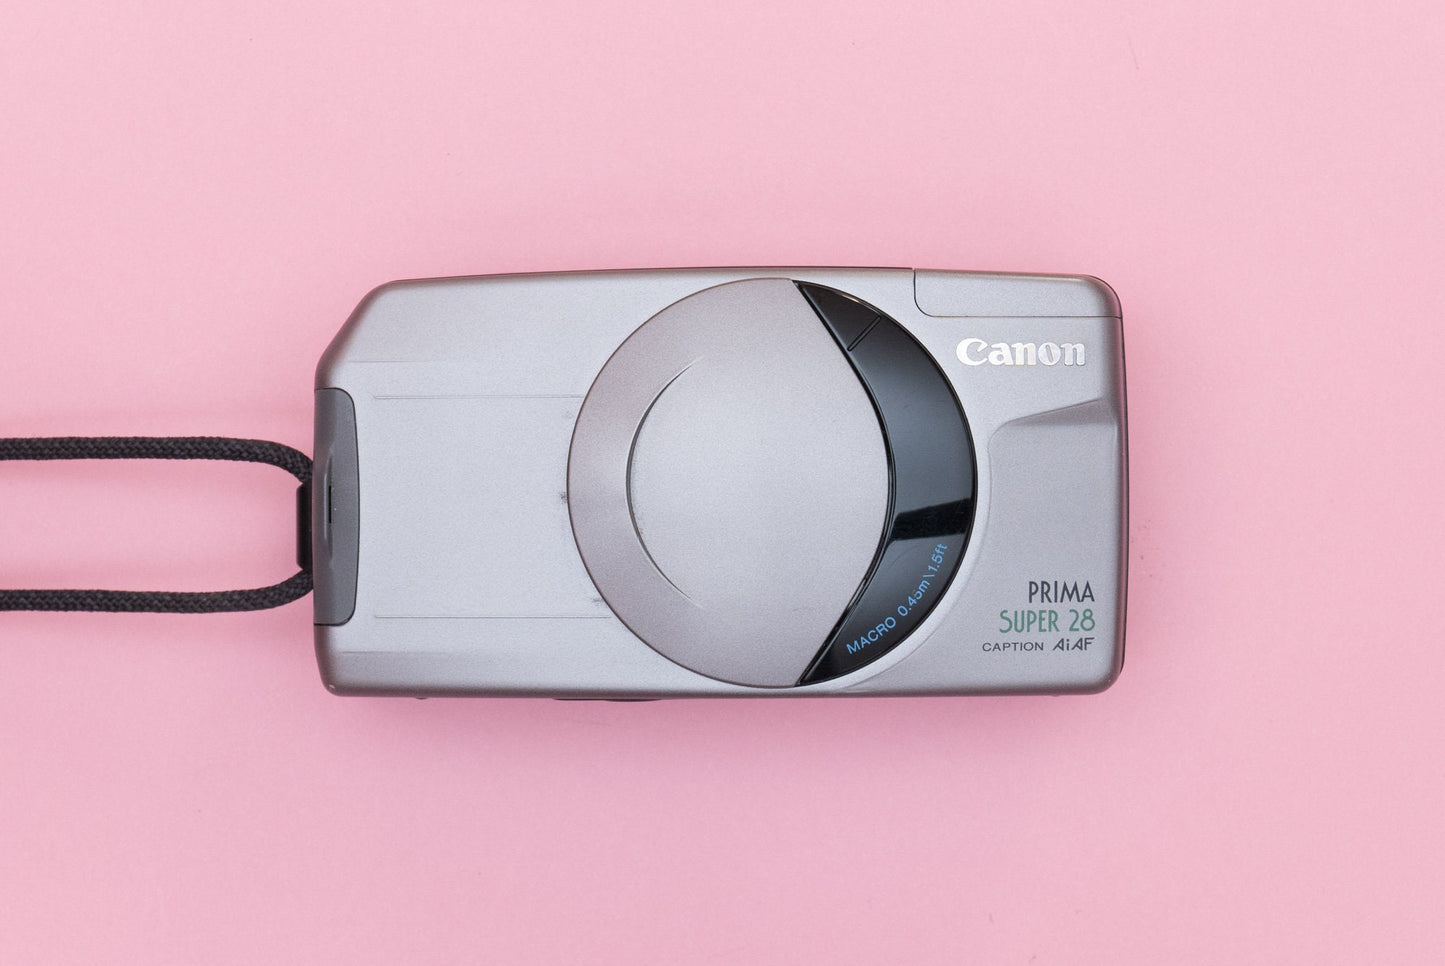 Canon Prima Super 28 Ai AF Compact 35mm Film Camera